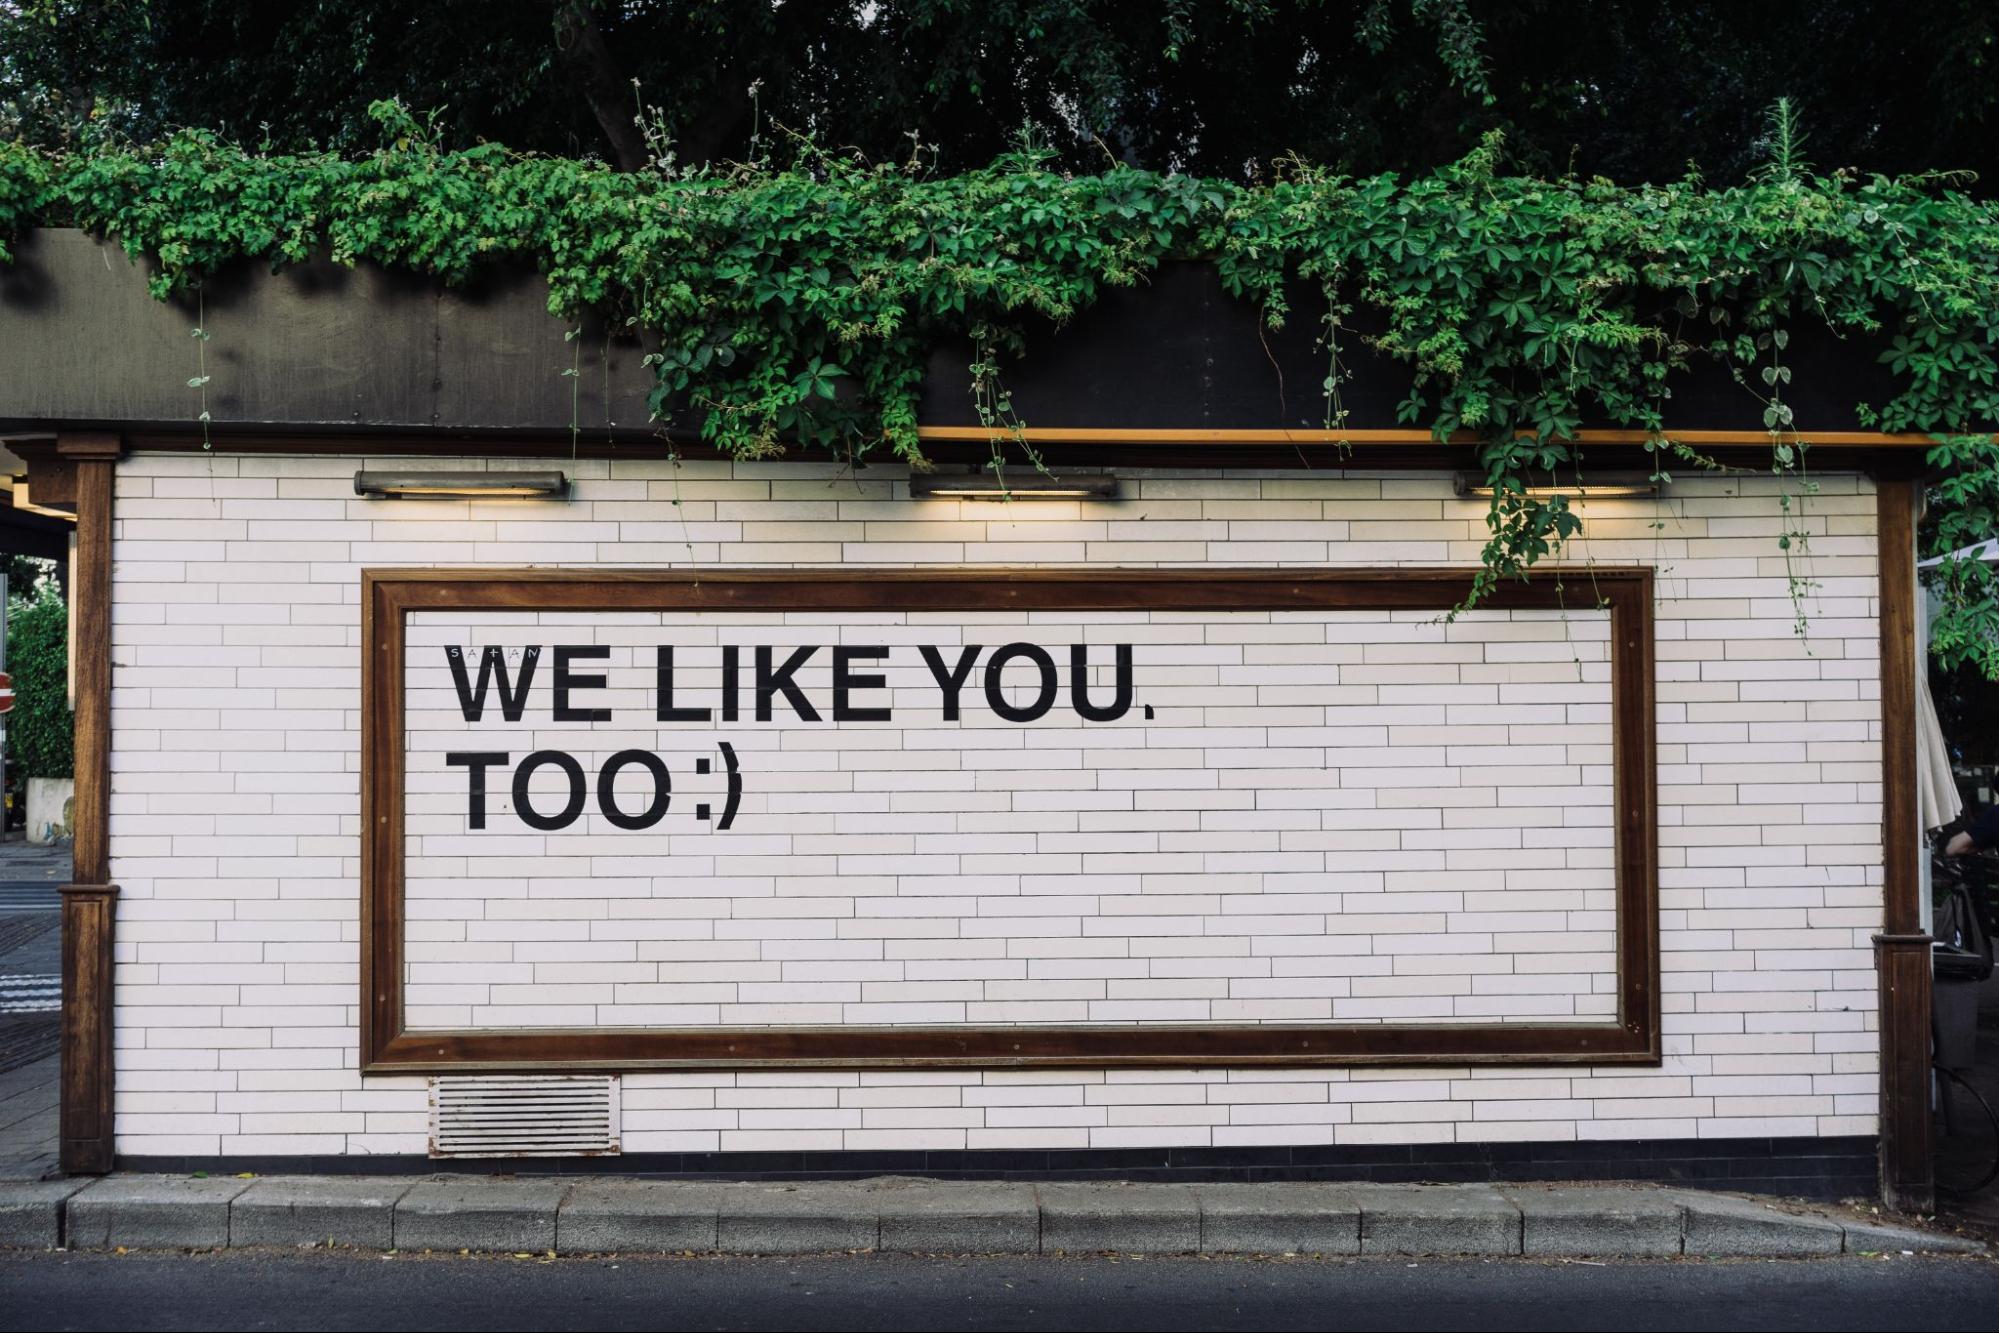 Graffiti on a wall saying "We like you too :)"